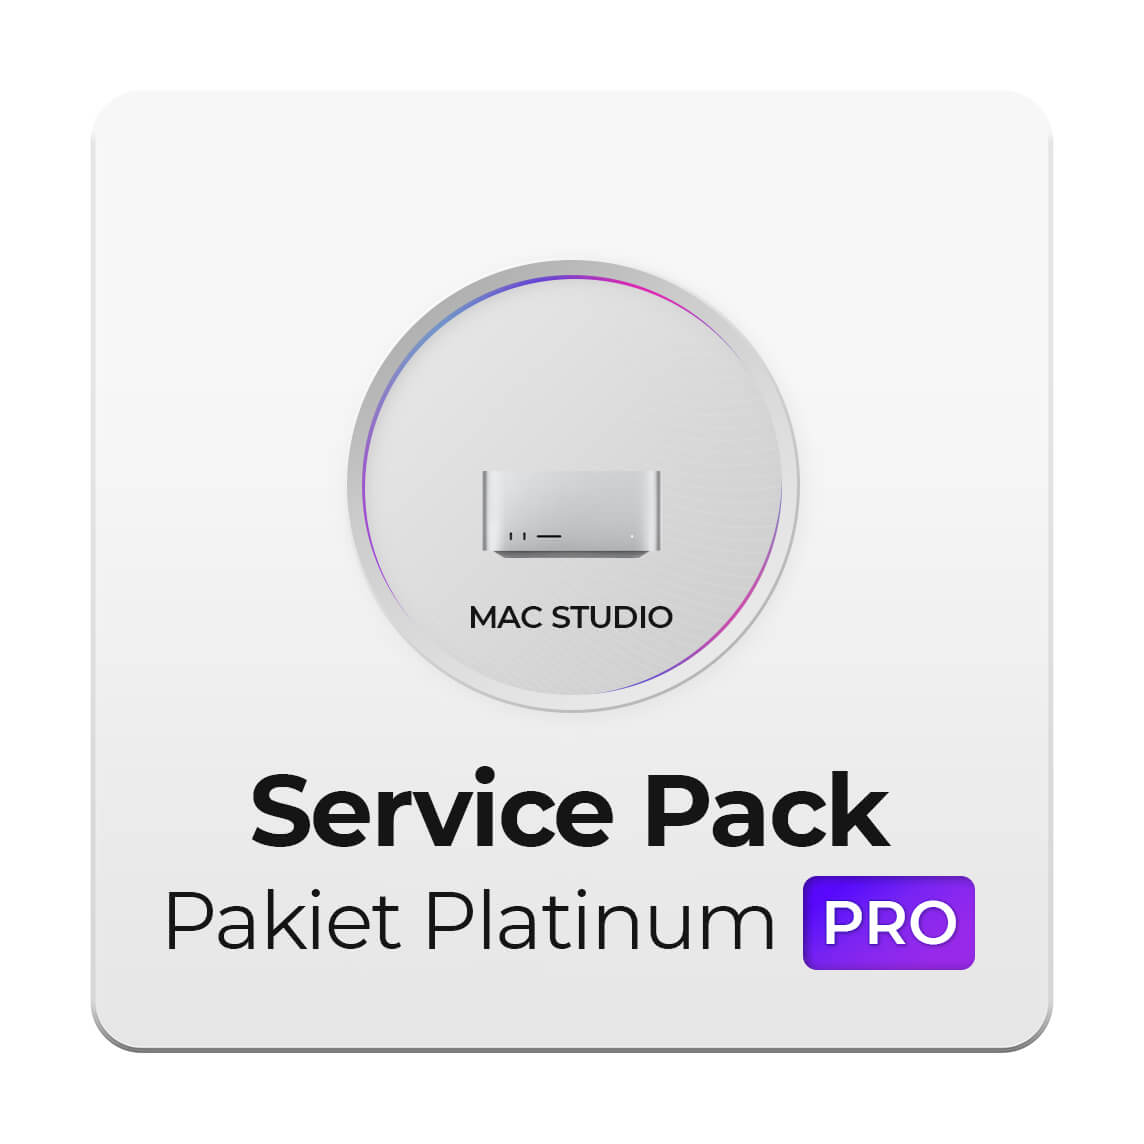 Service Pack - Pakiet Platinum Pro 4Y dla Apple Mac Studio